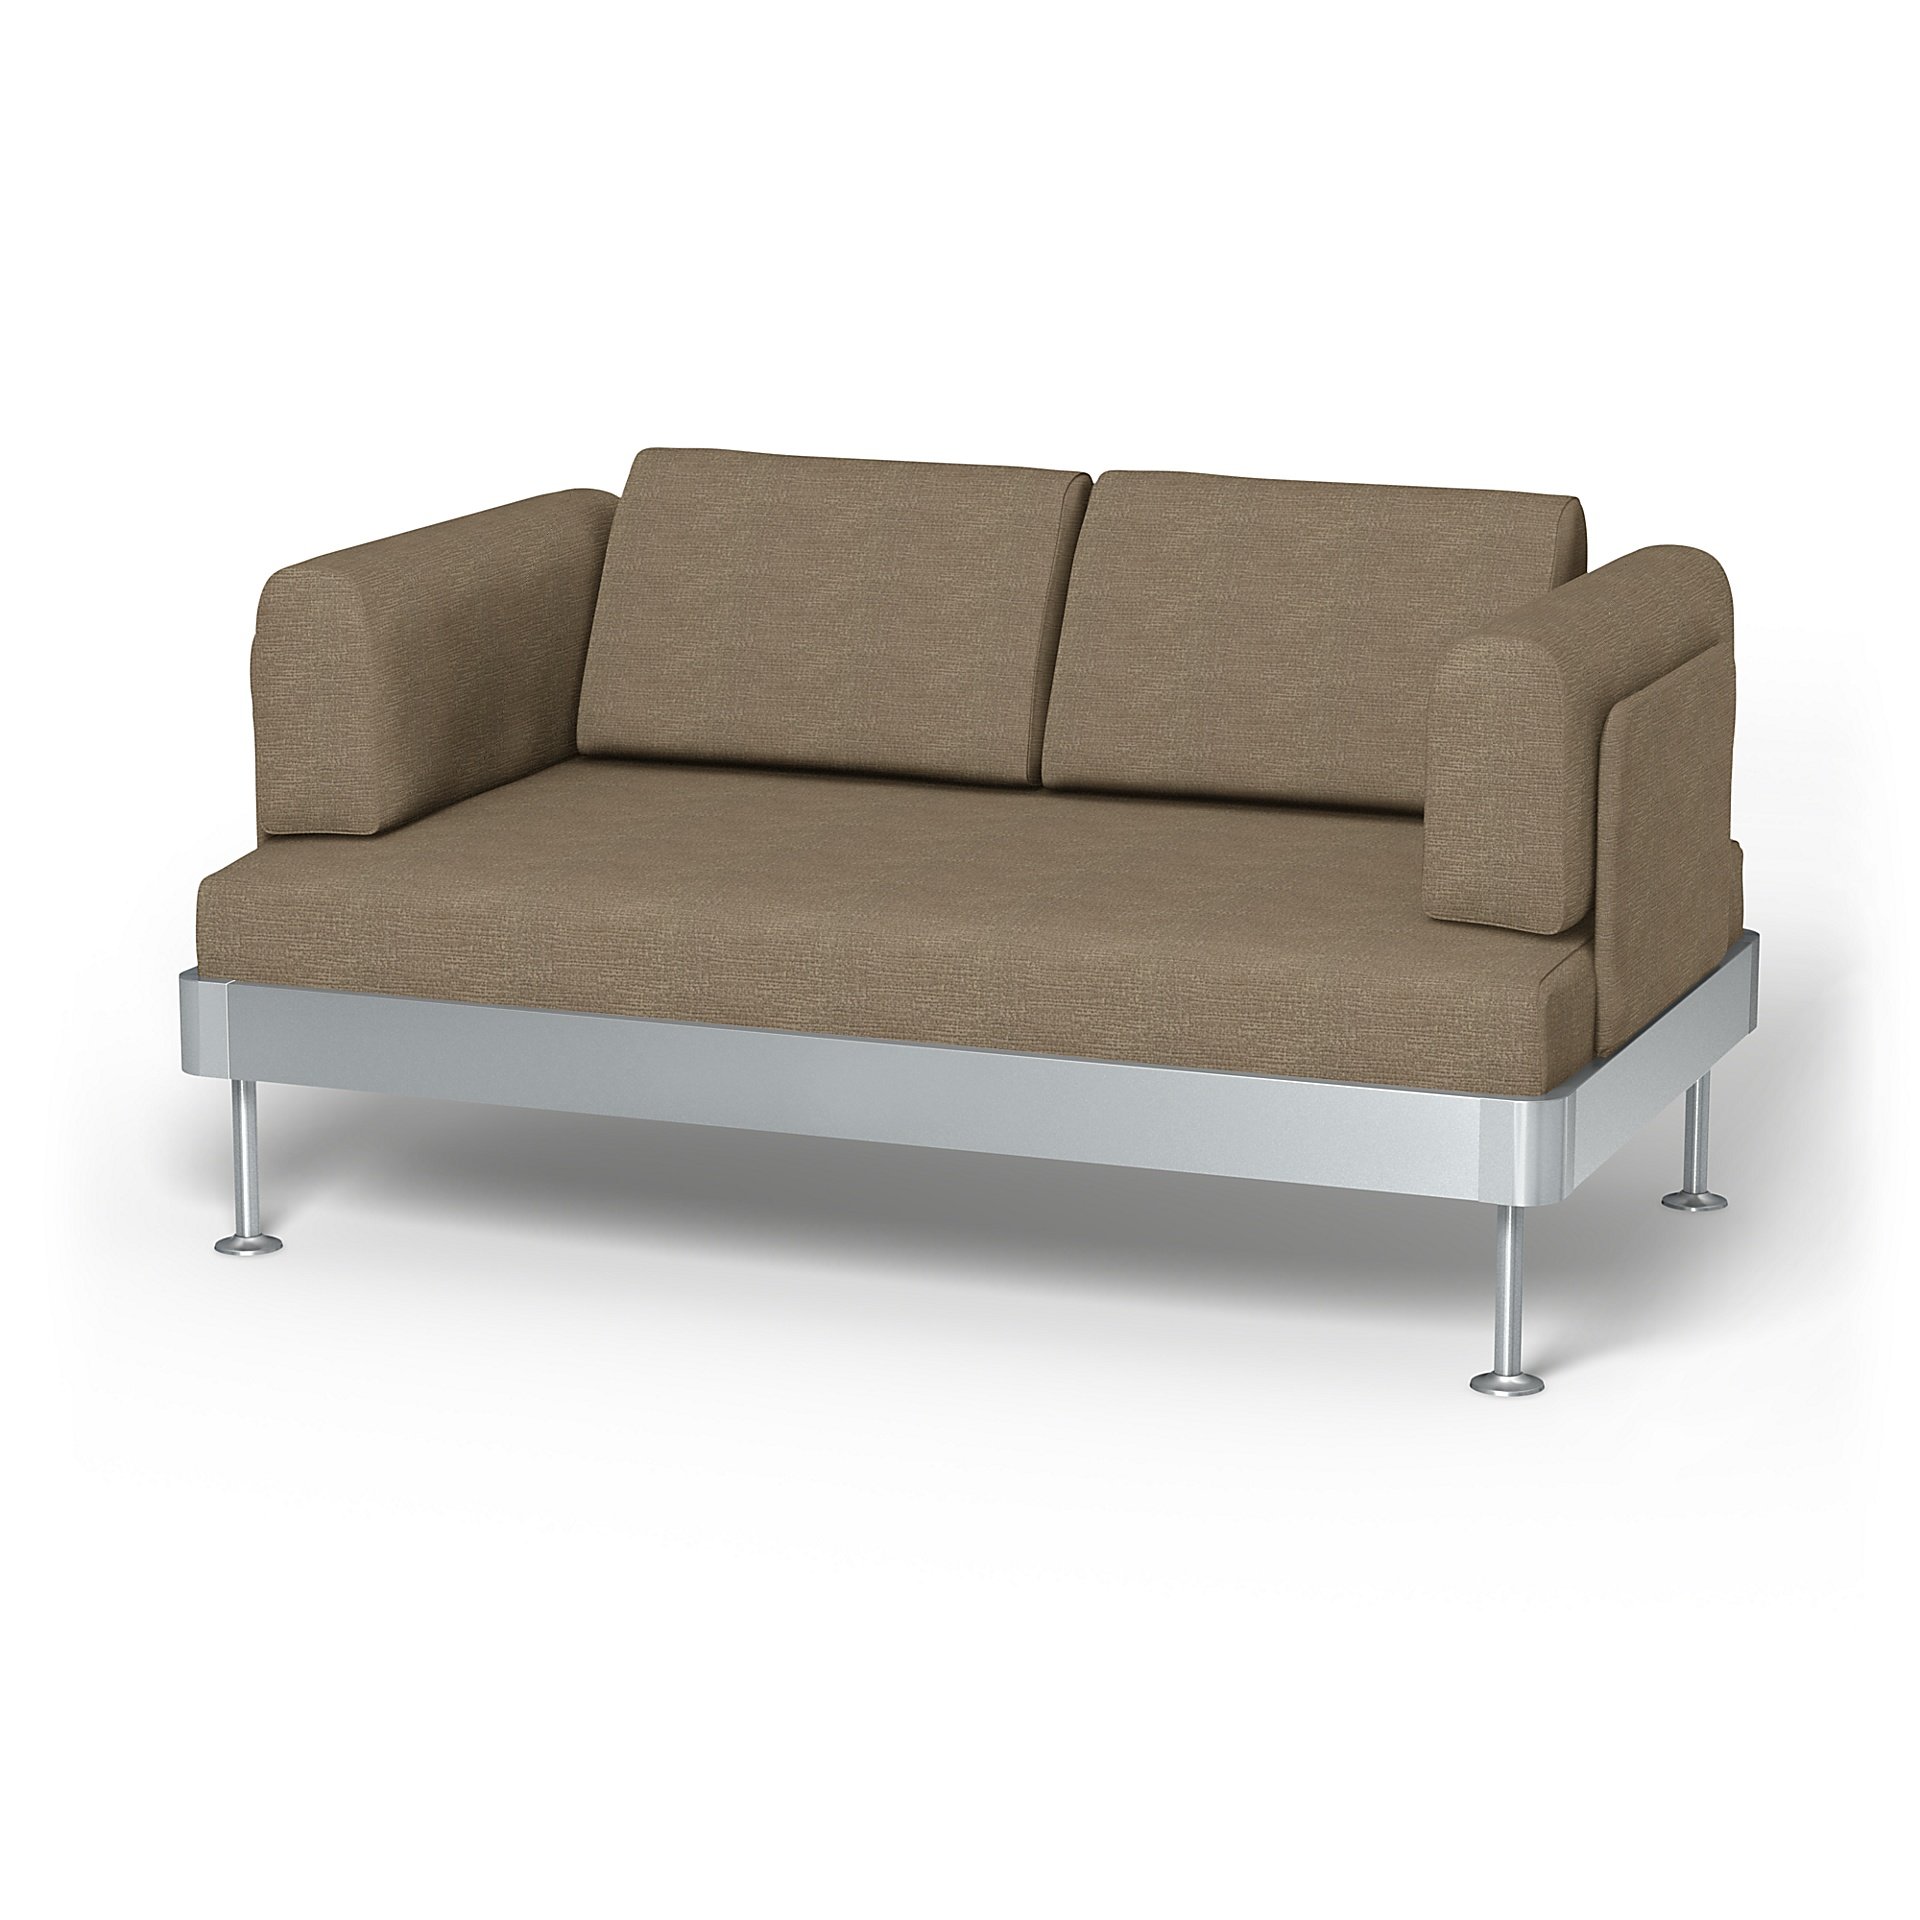 IKEA - Delaktig 2 Seater Sofa Cover, Camel, Boucle & Texture - Bemz